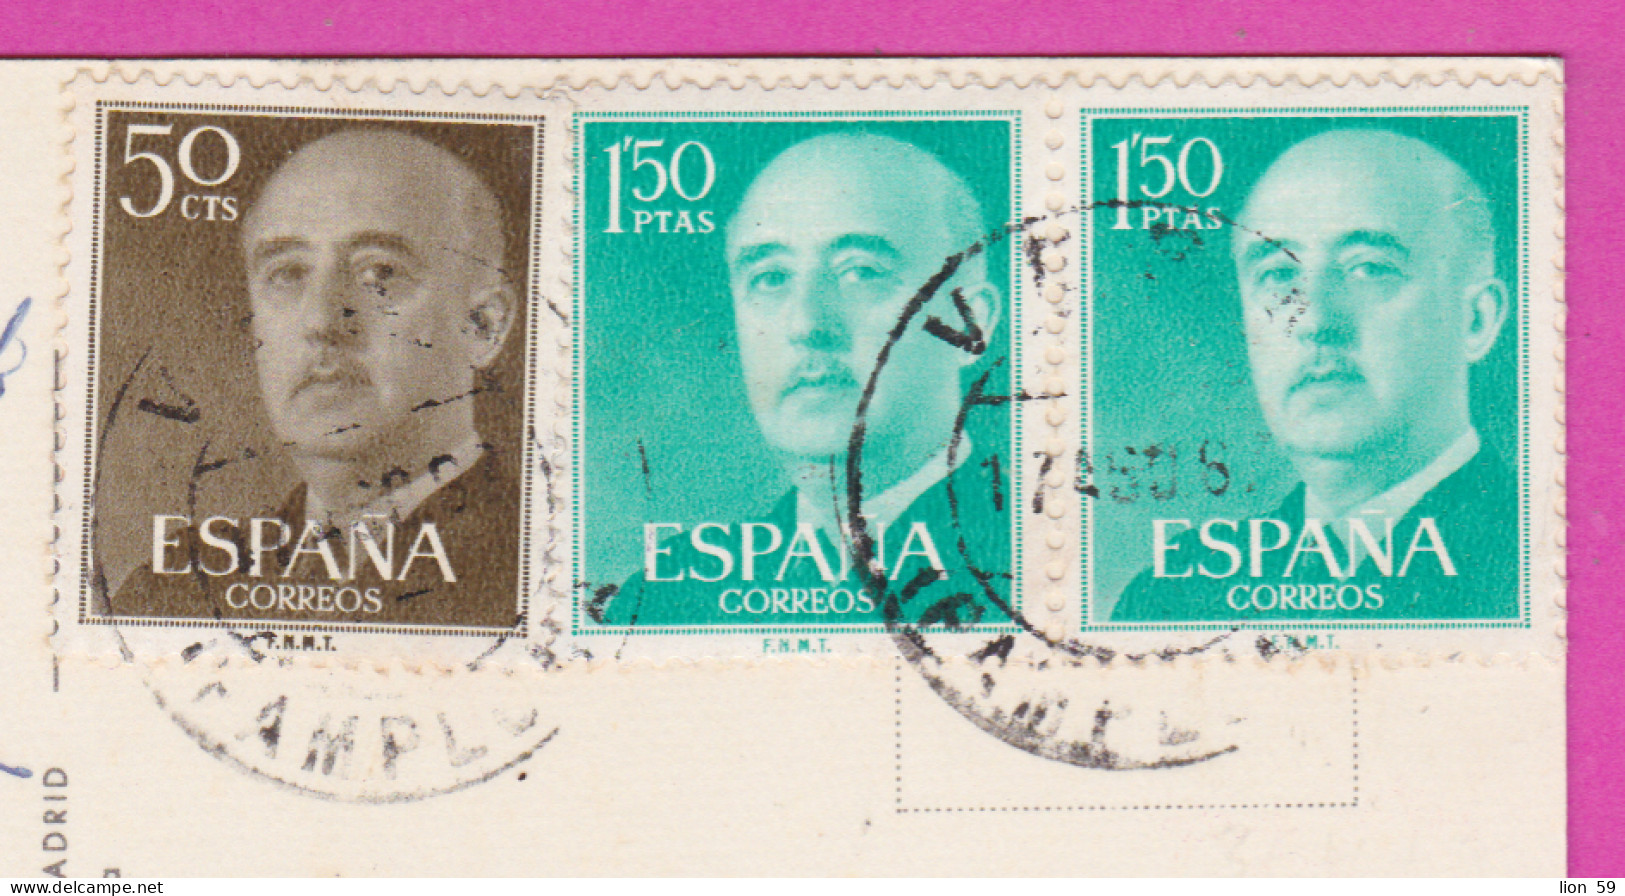 293816 / Spain - San Sebastian - Bay Nochurnal View  PC 1961 USED 50 Cts +1.50+1.50 Ptas General Francisco Franco - Storia Postale